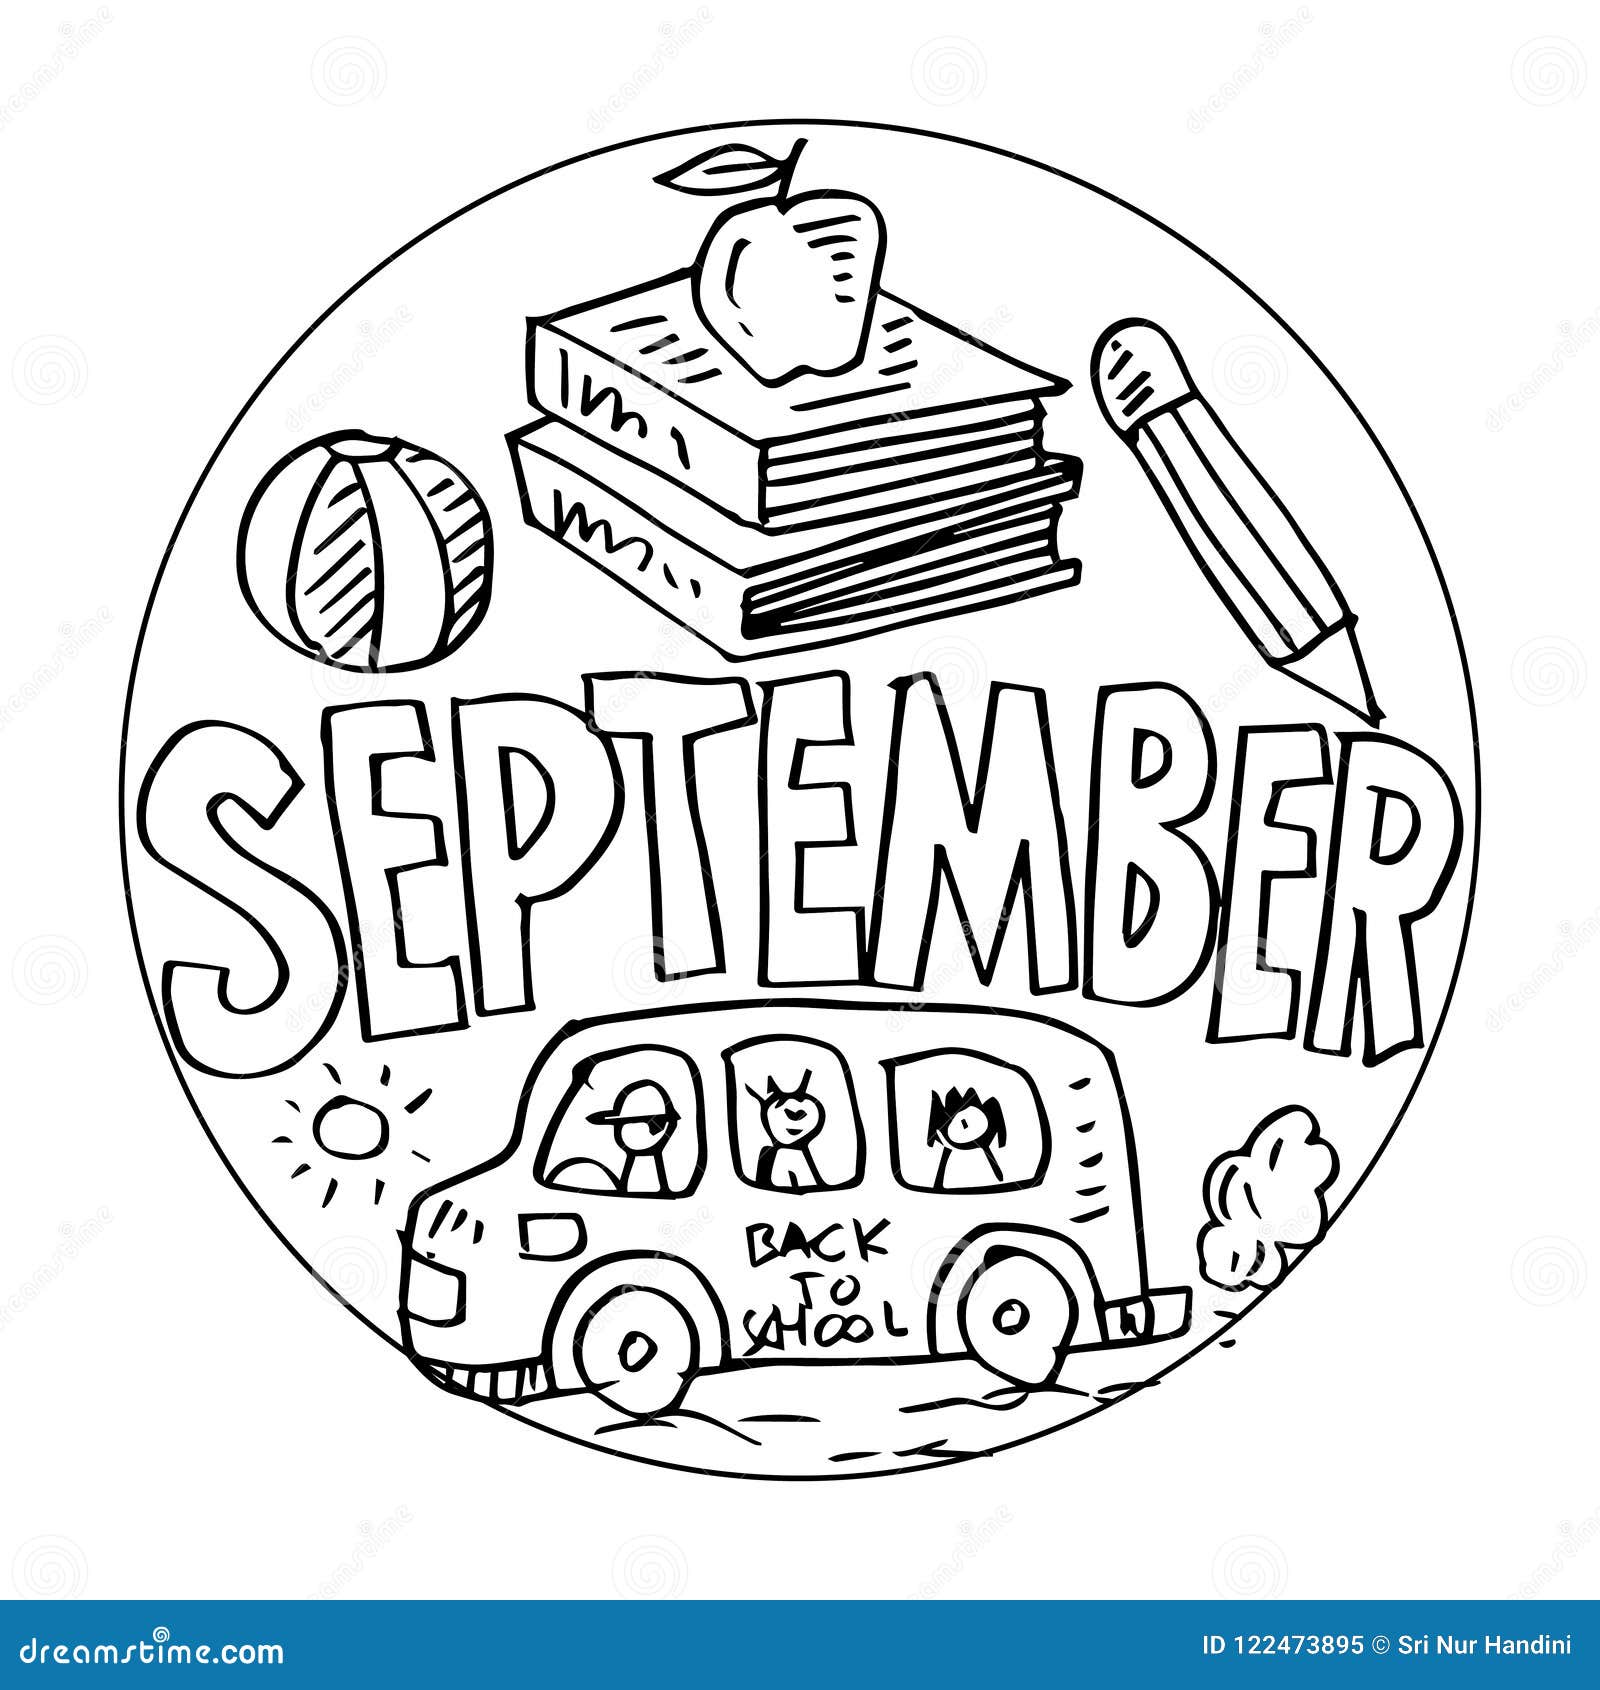 September coloring pages for kids stock illustration